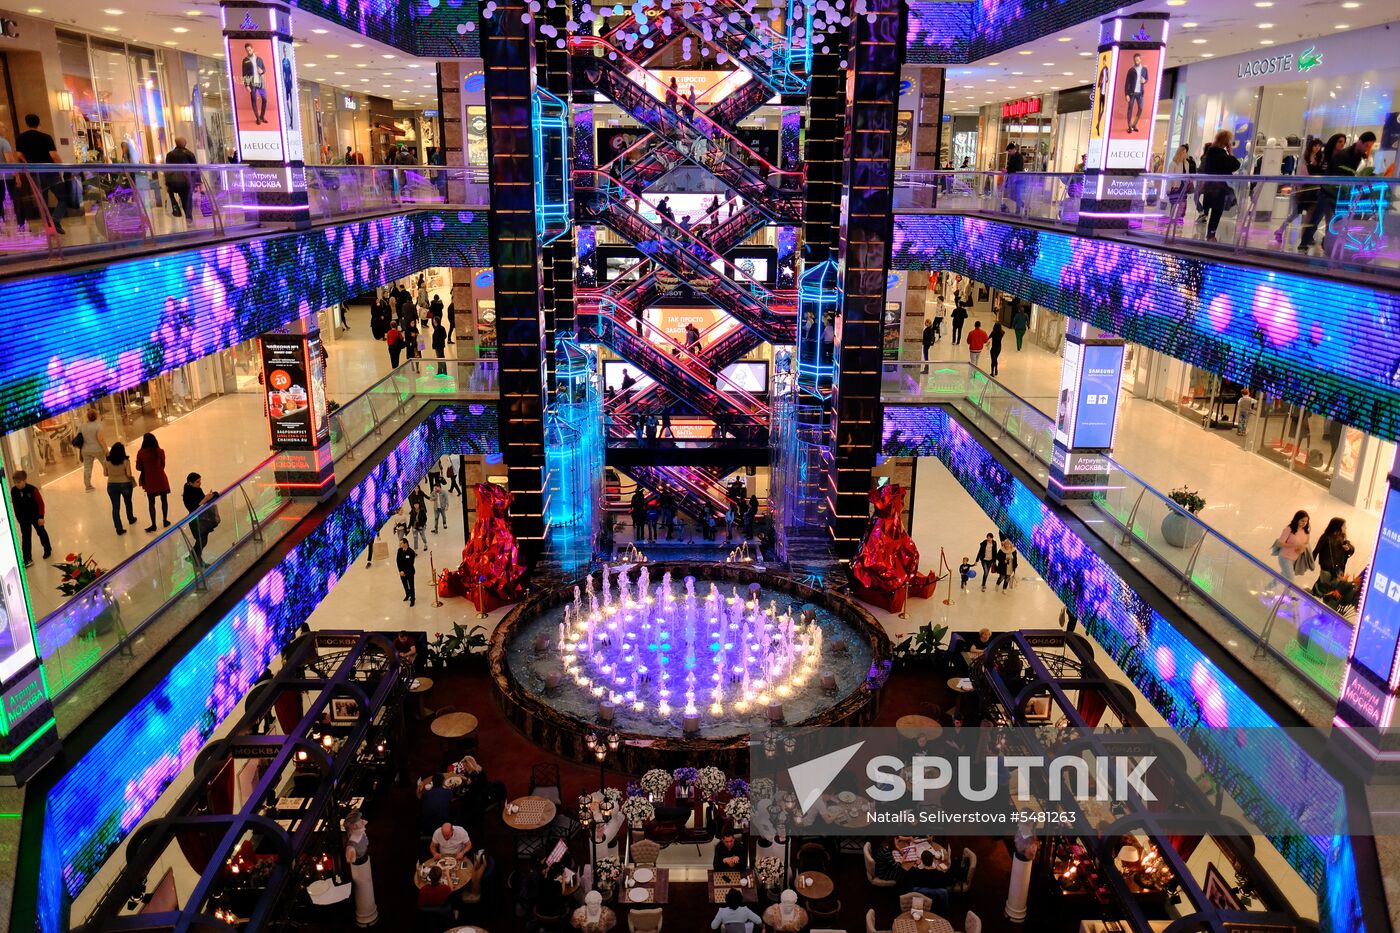 Yevropeisky shopping mall